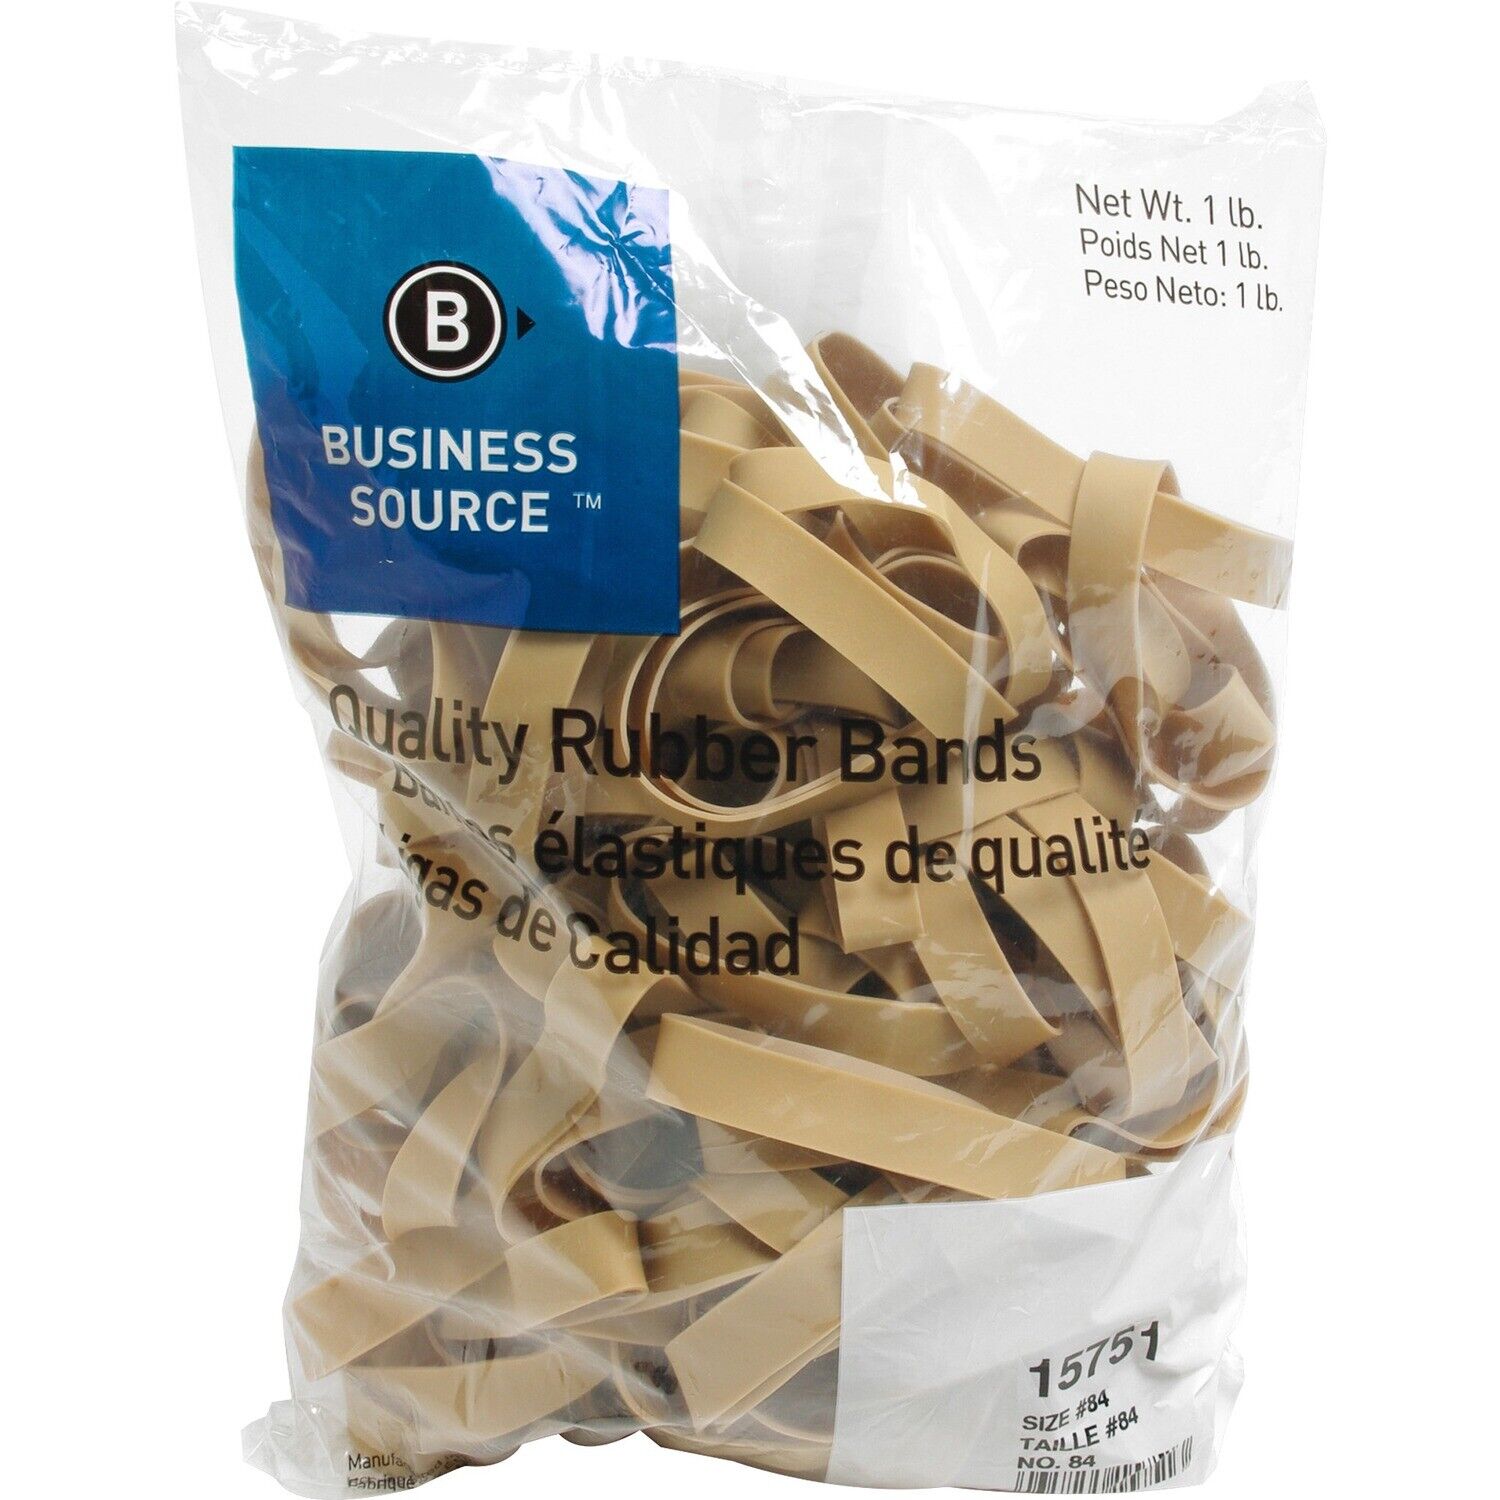 Business Source Rubber Bands Size 10 1 lb./BG 1-1/4"x1/16" Natural Crepe 15725